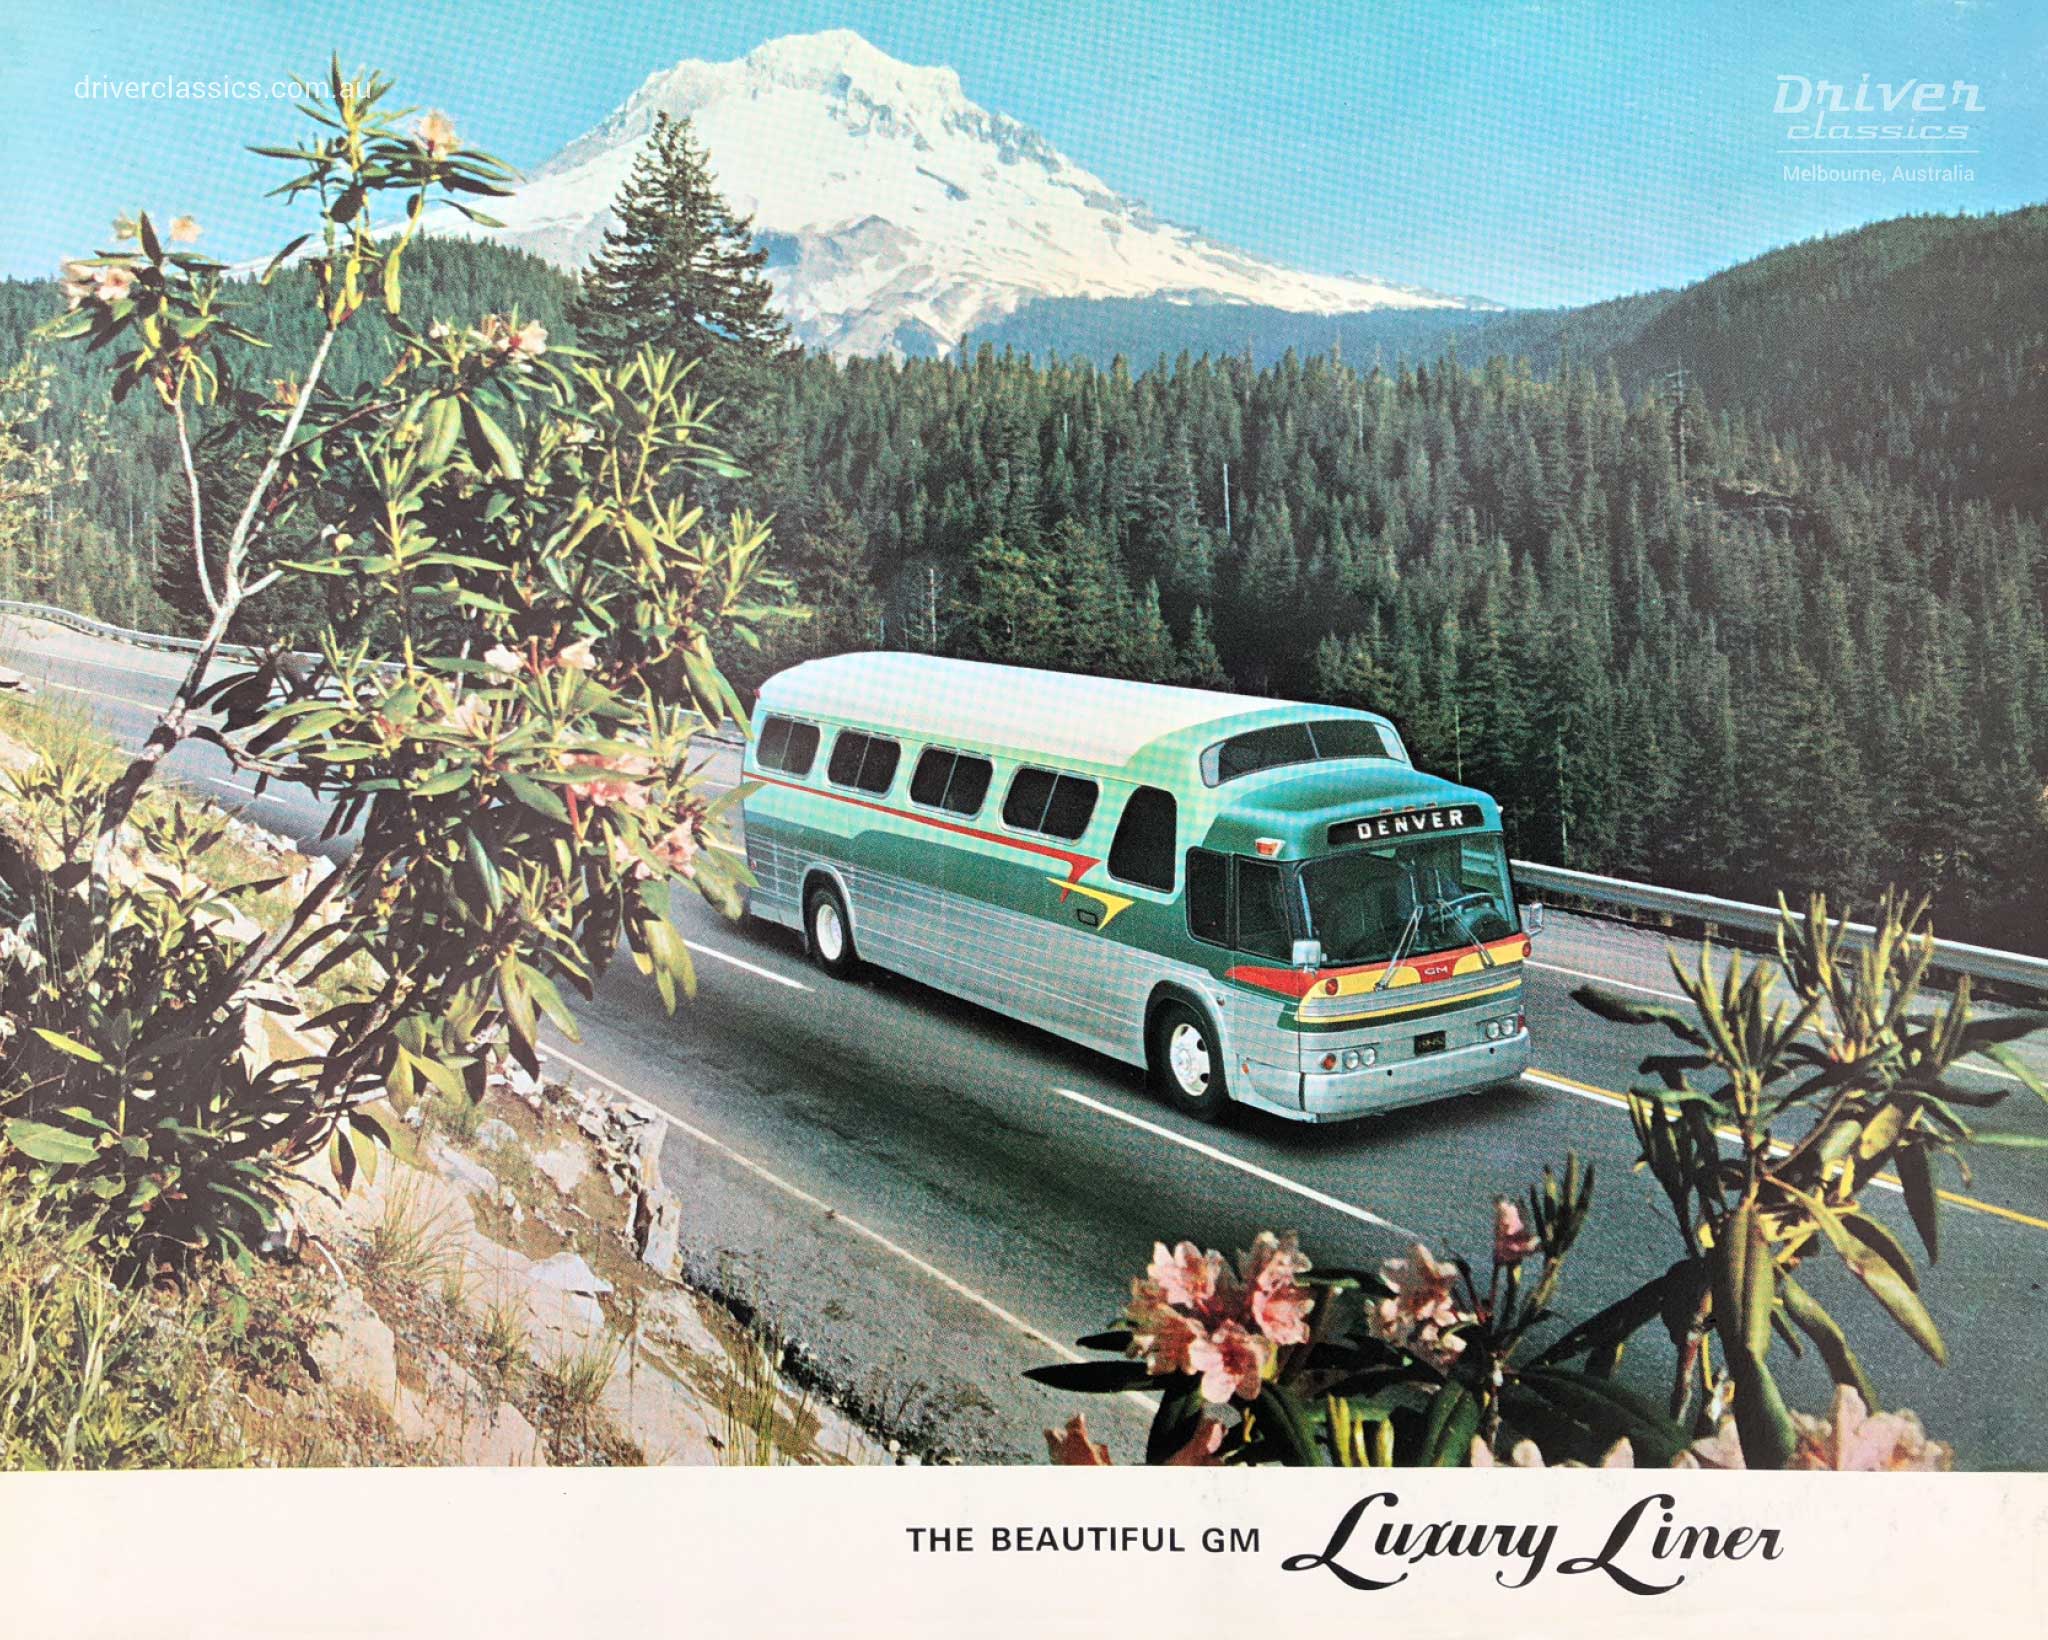 1966 General Motors PD 4107 bus brochure cover